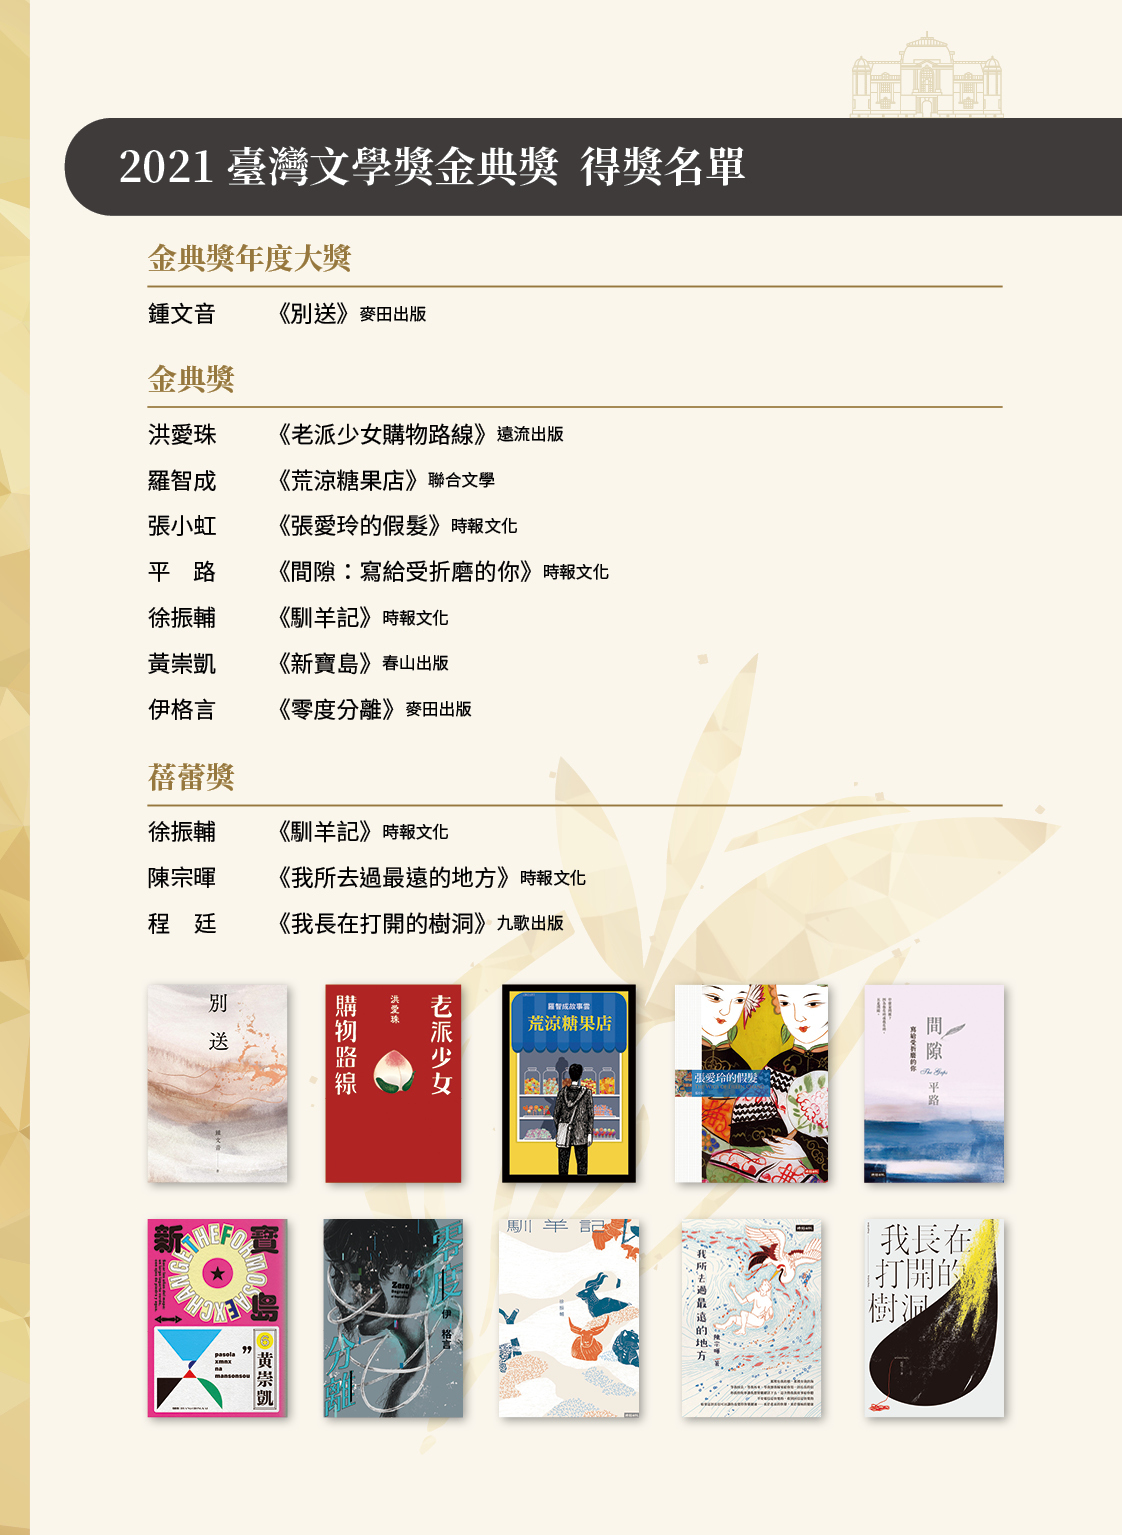 Chung Wen-yin remporte le Grand Prix de littérature de Taïwan 2021